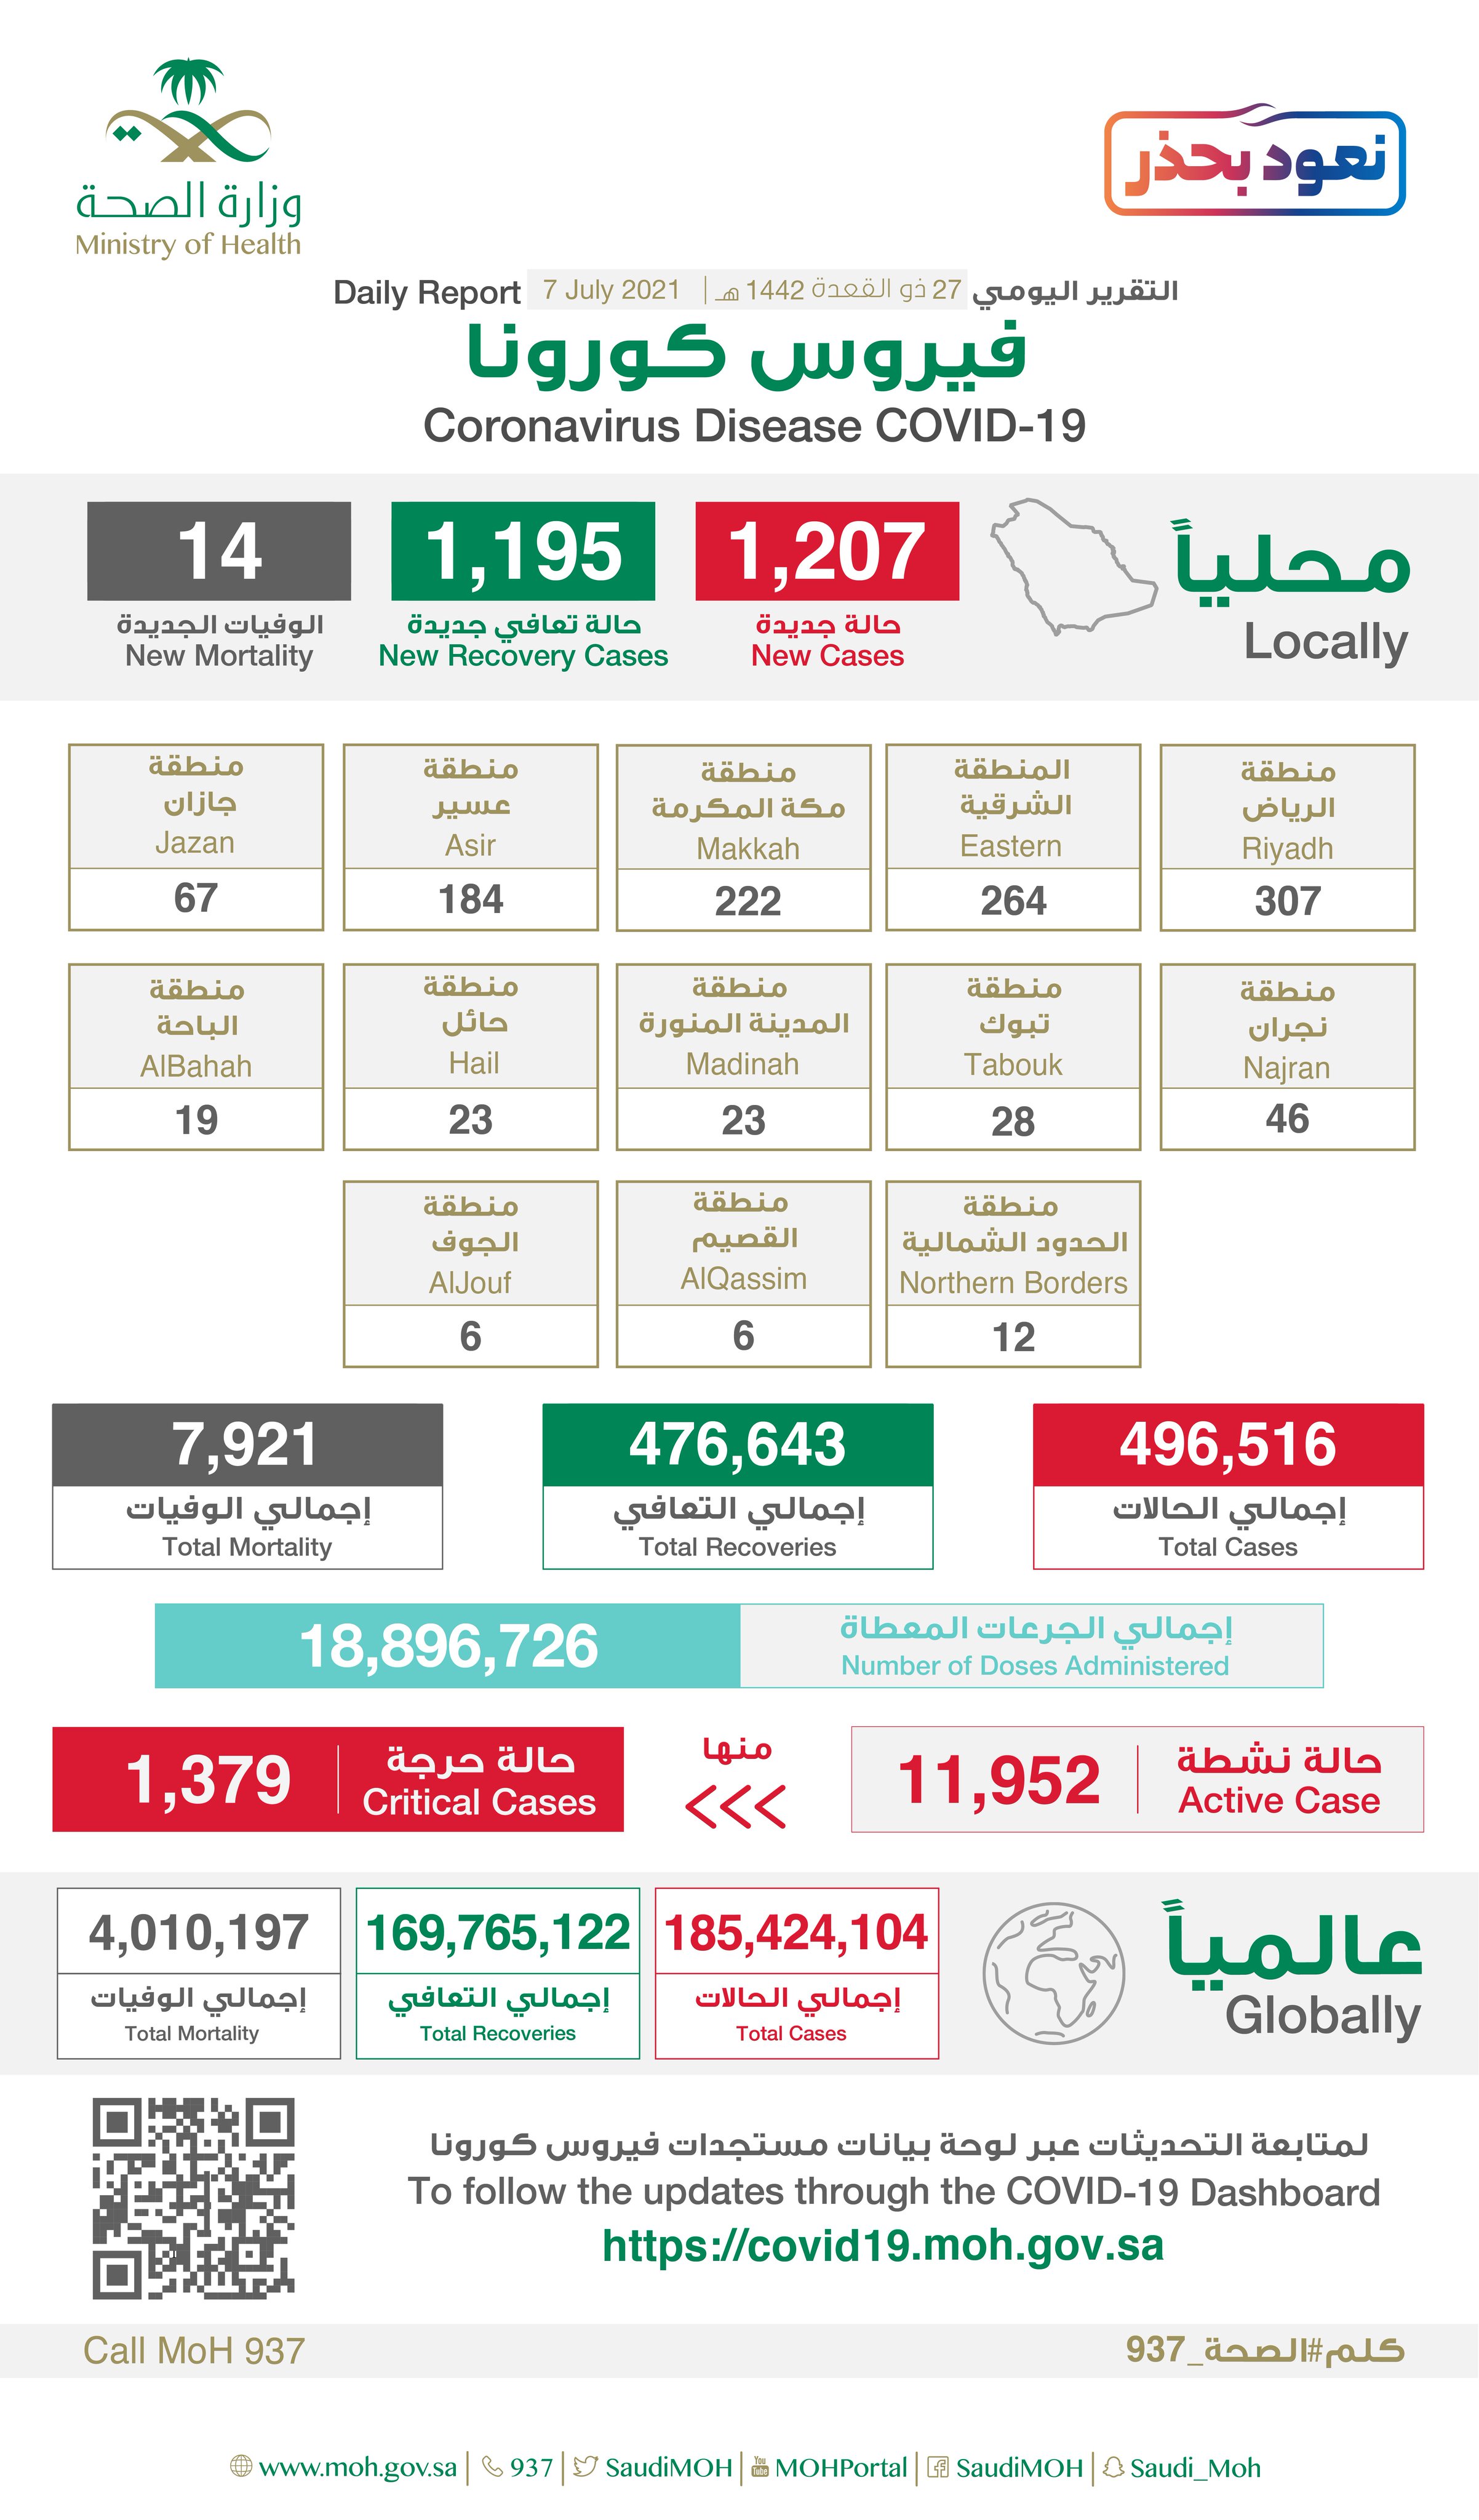 Saudi Arabia Coronavirus : Total Cases :496,516 , New Cases :1,207, Cured : 476,643 , Deaths: 7,921, Active Cases : 11,952